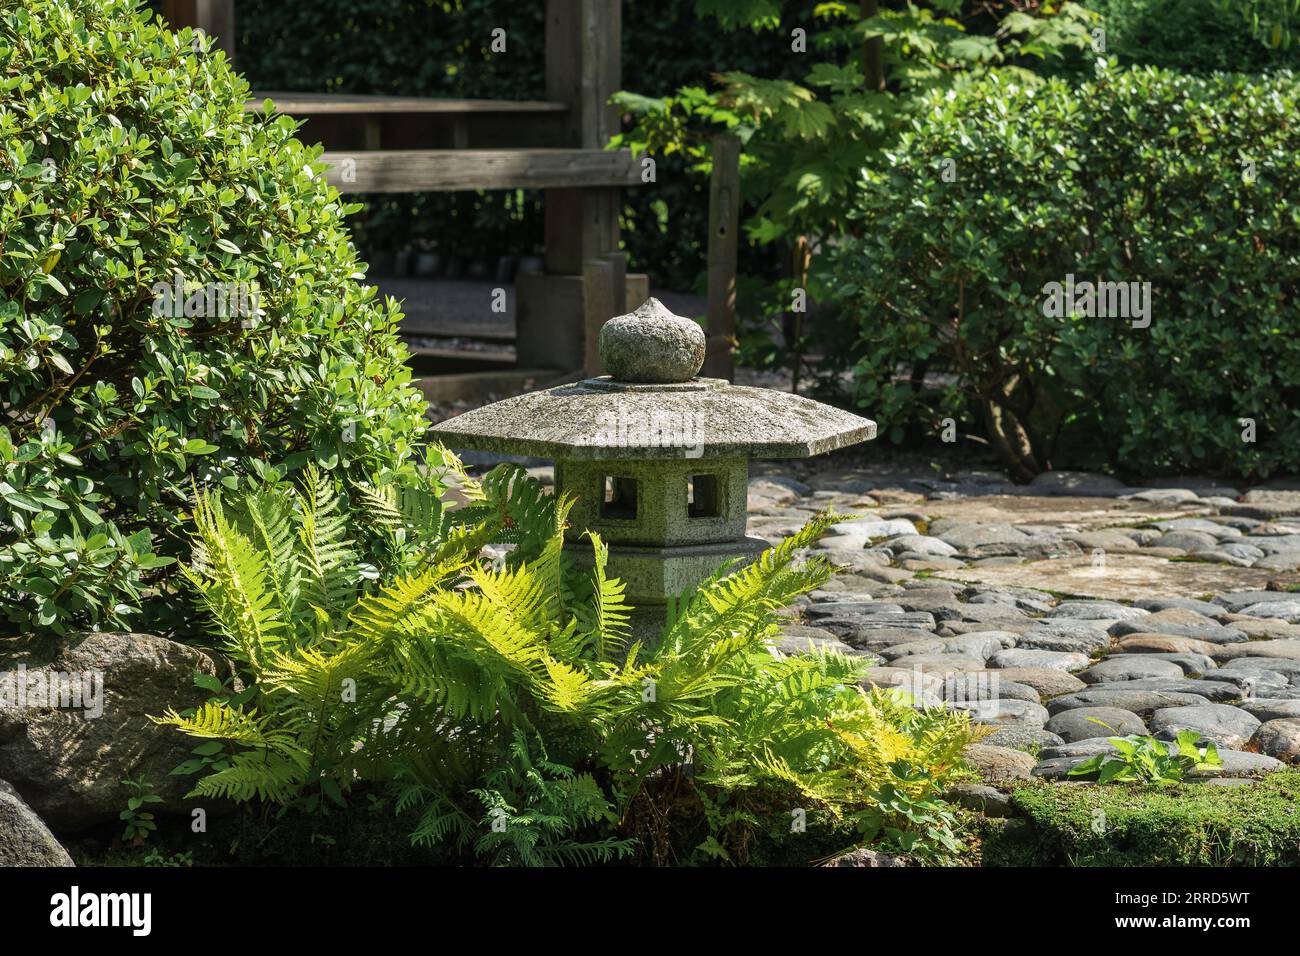 stone lantern amonf ferns in a Japanese garden Stock Photo